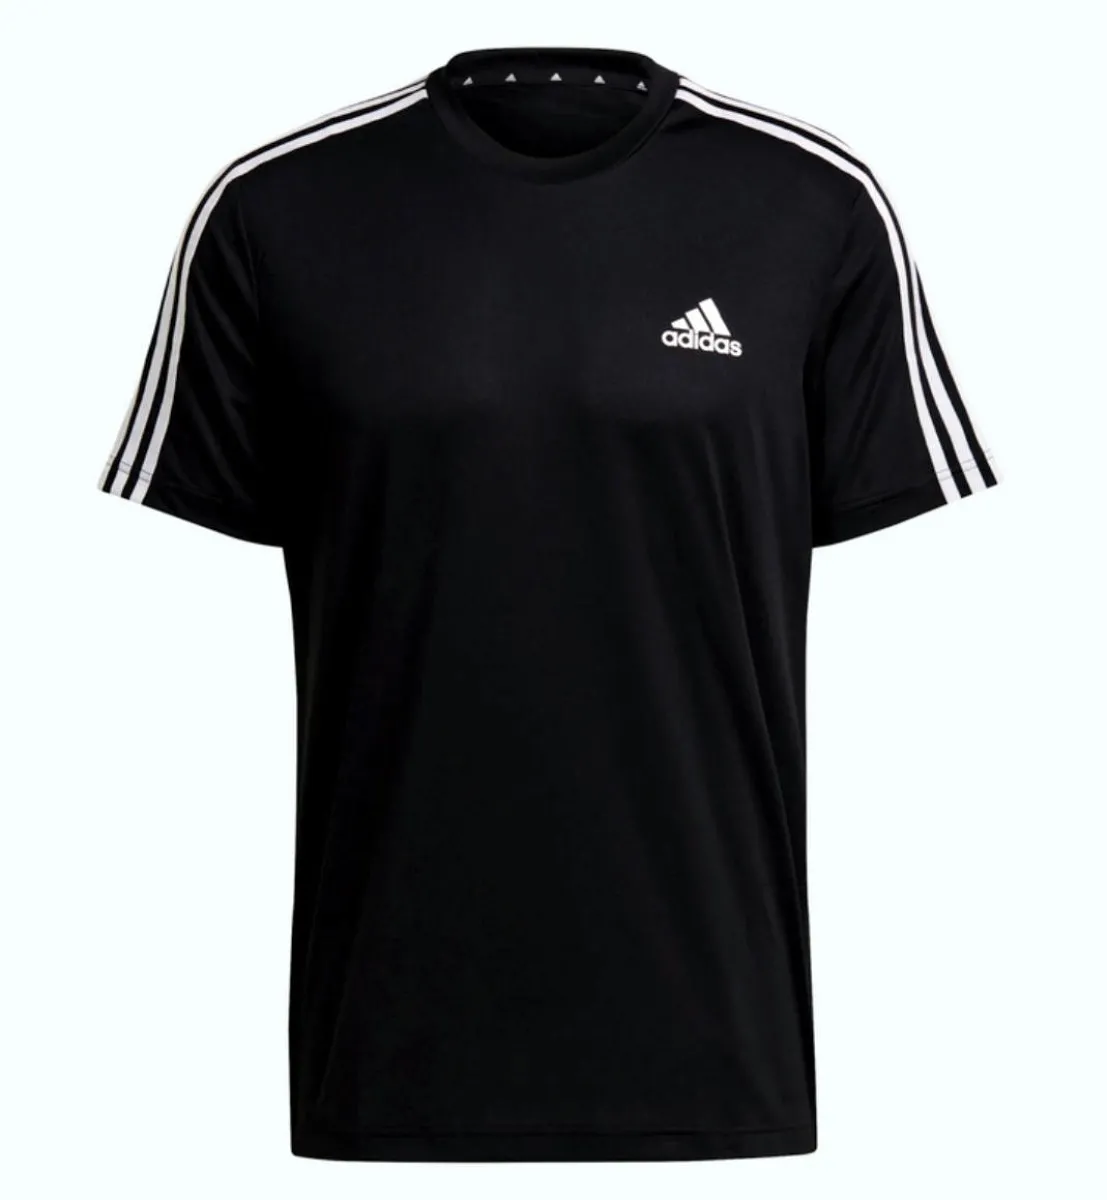 adidas T-Shirt 3S black